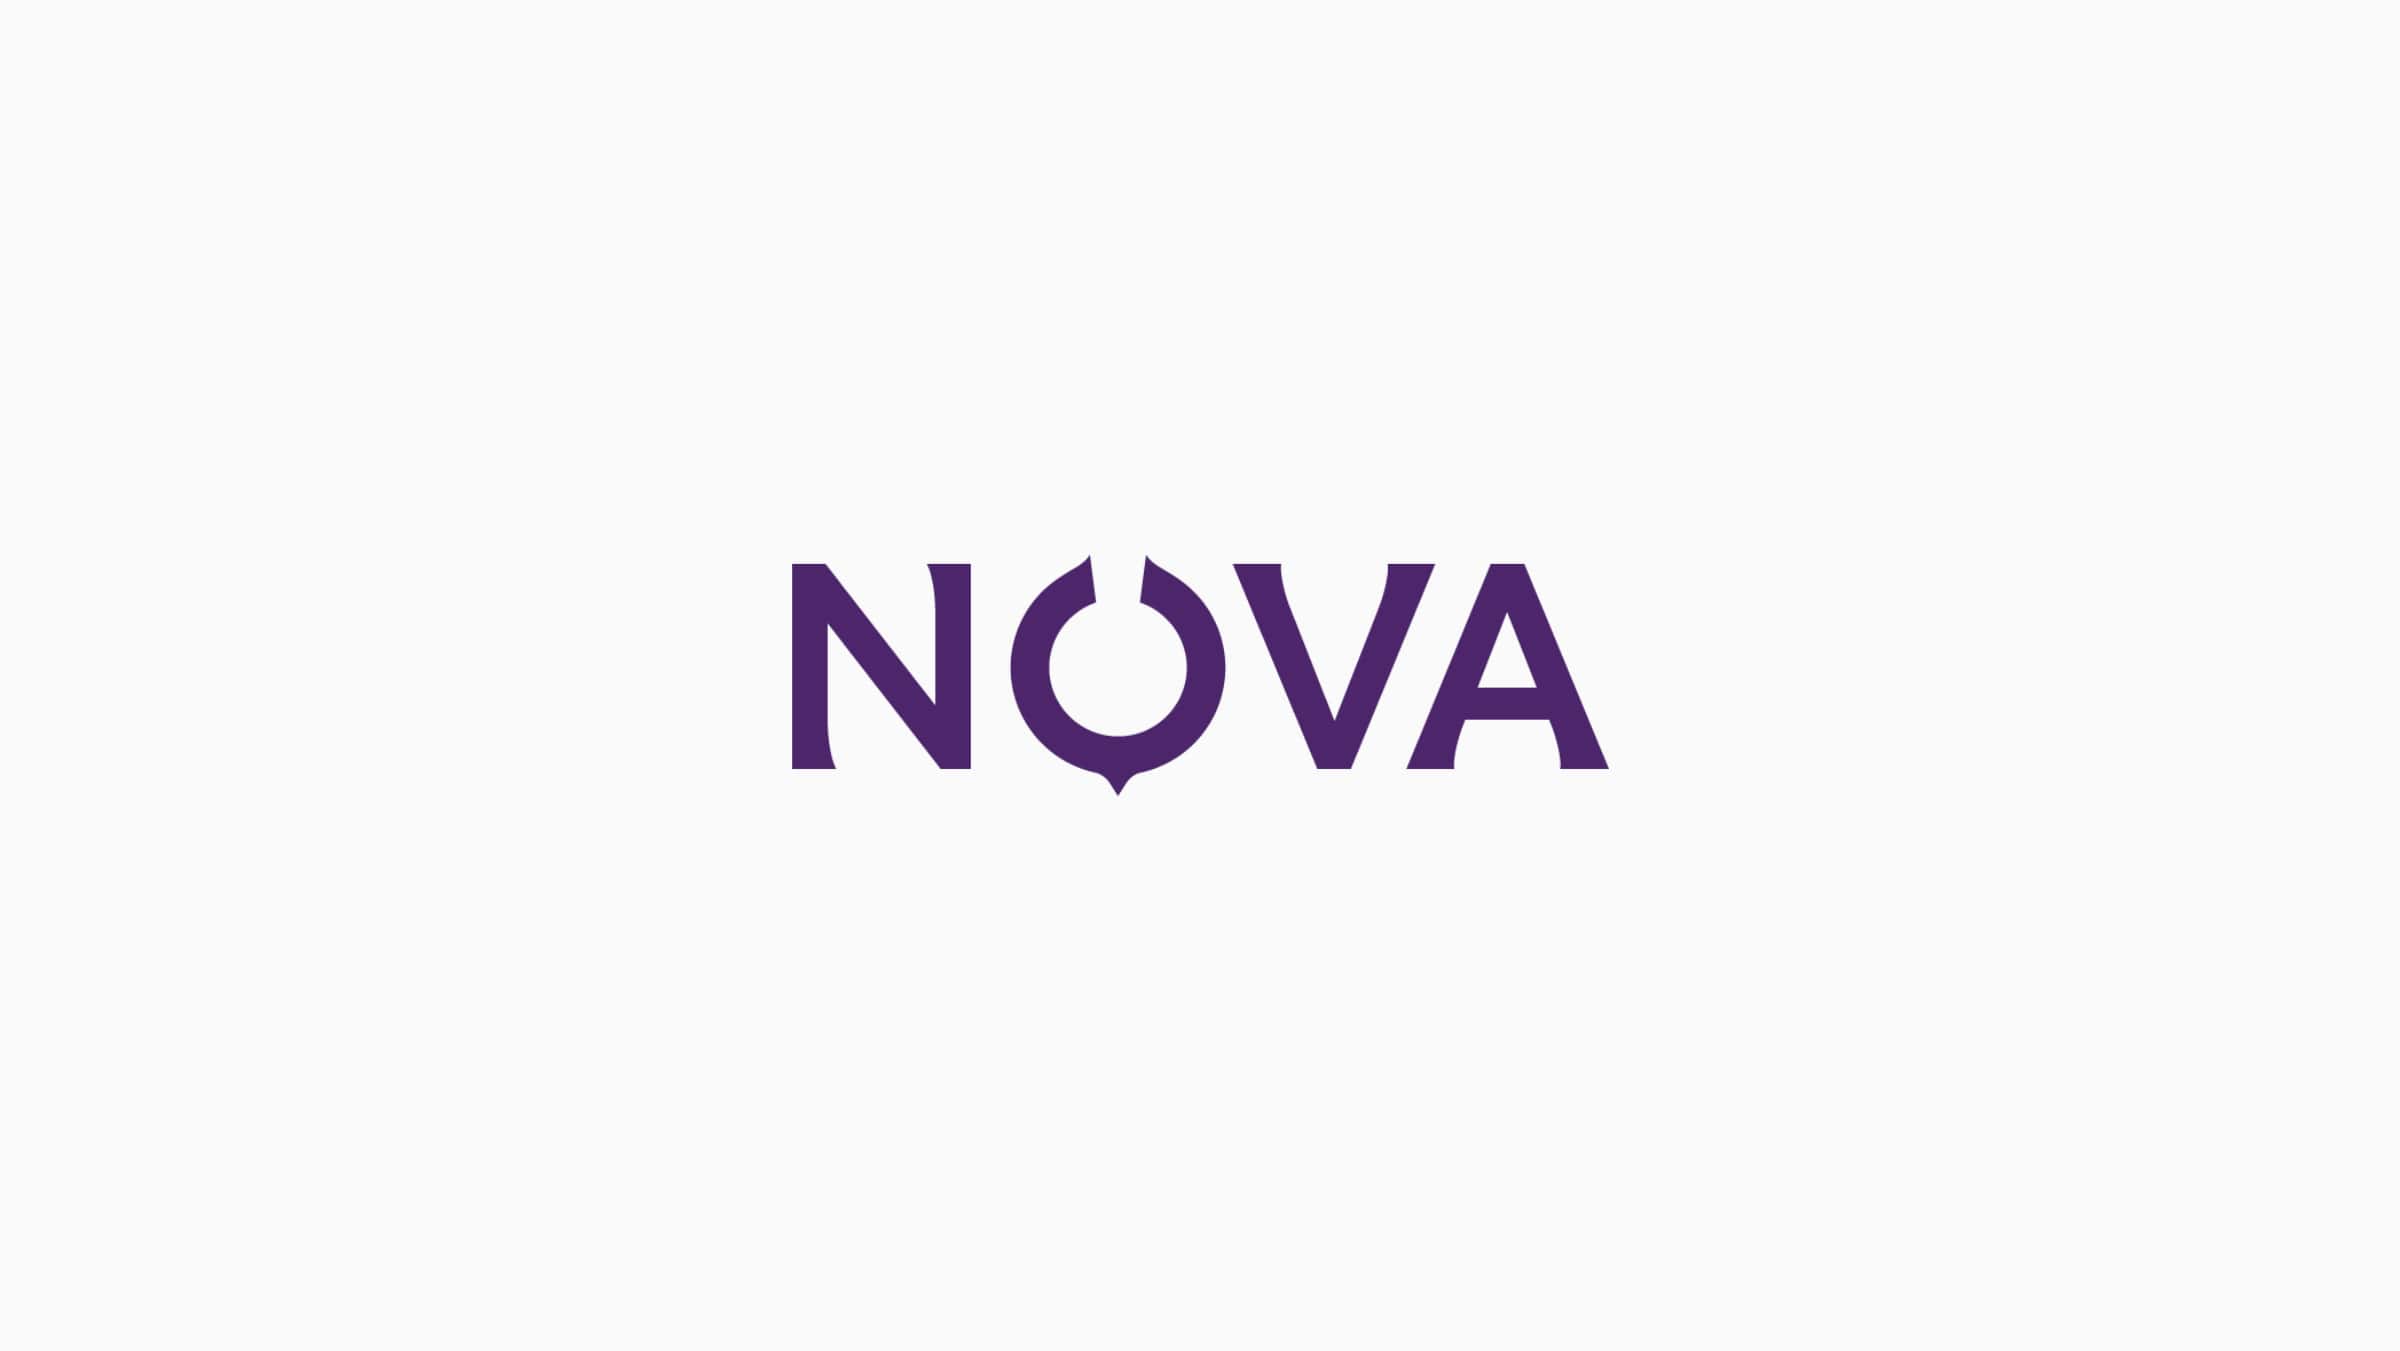 The Nova CPA logo